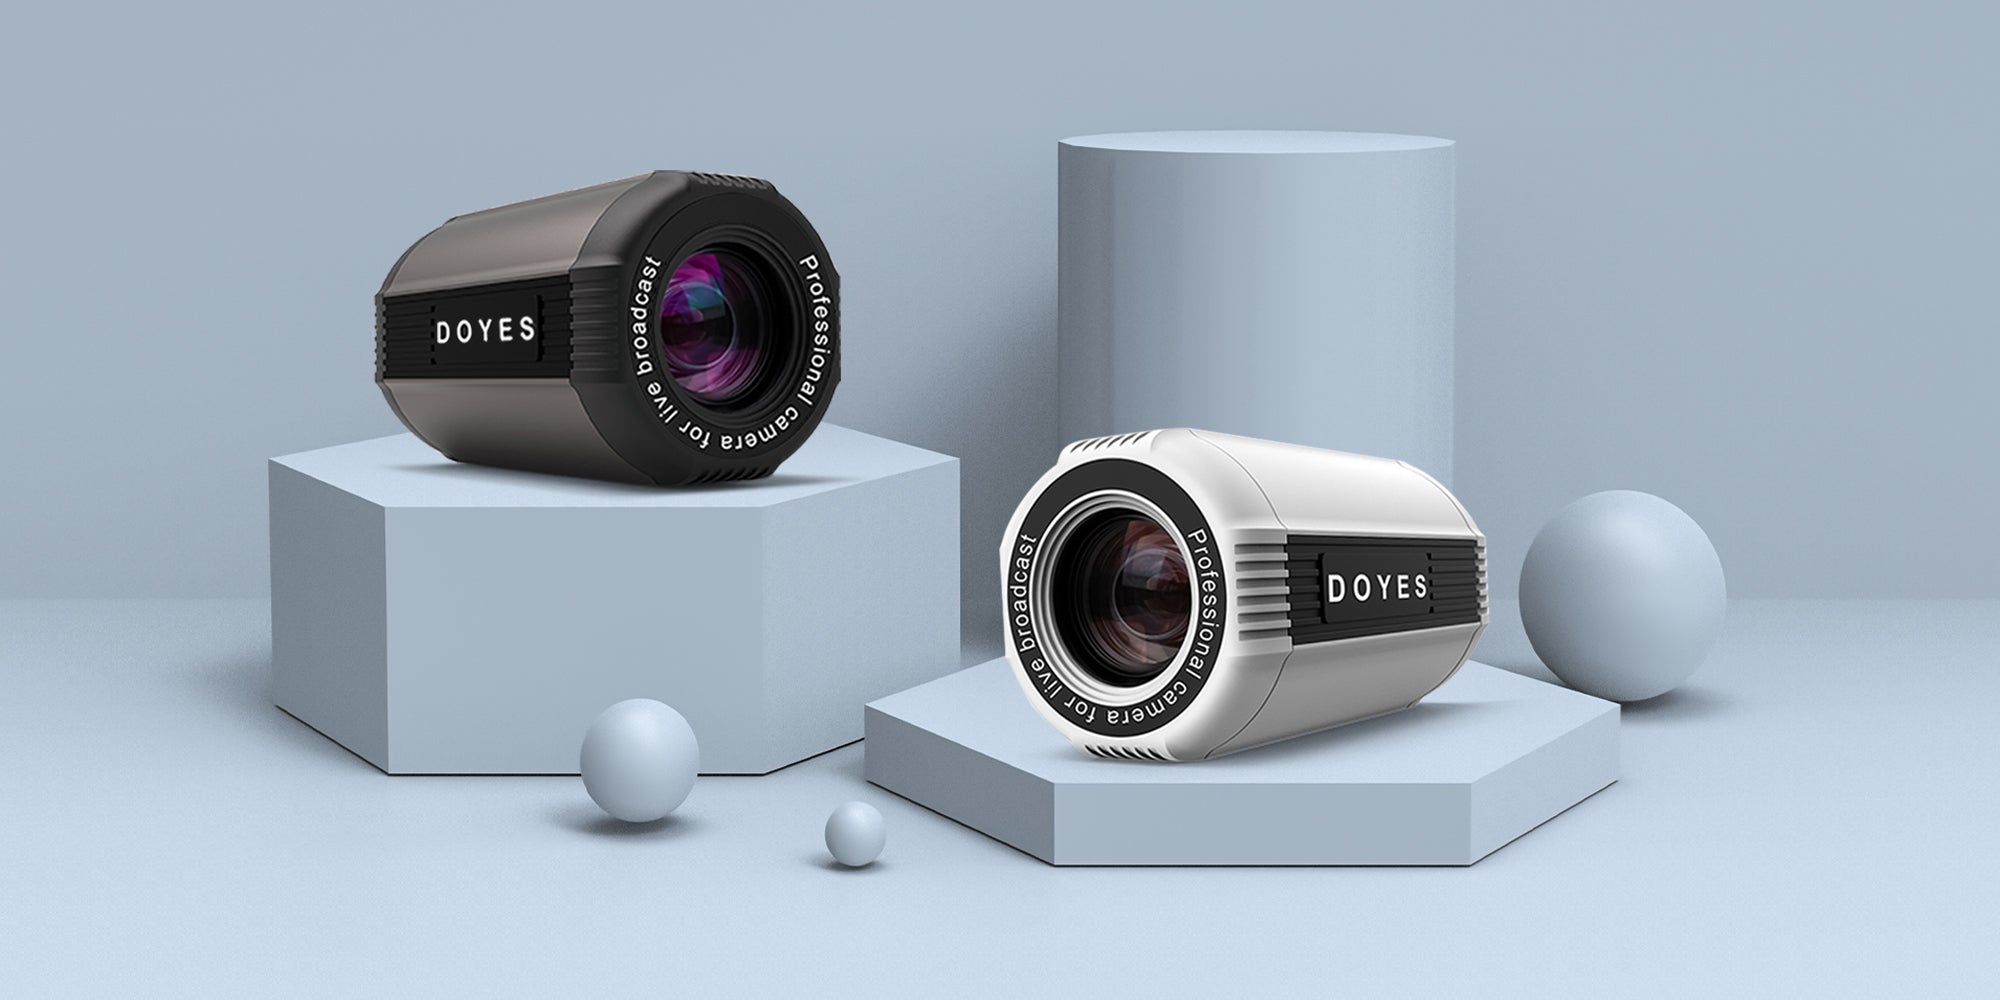 Doyestech live streaming optical zoom cameras